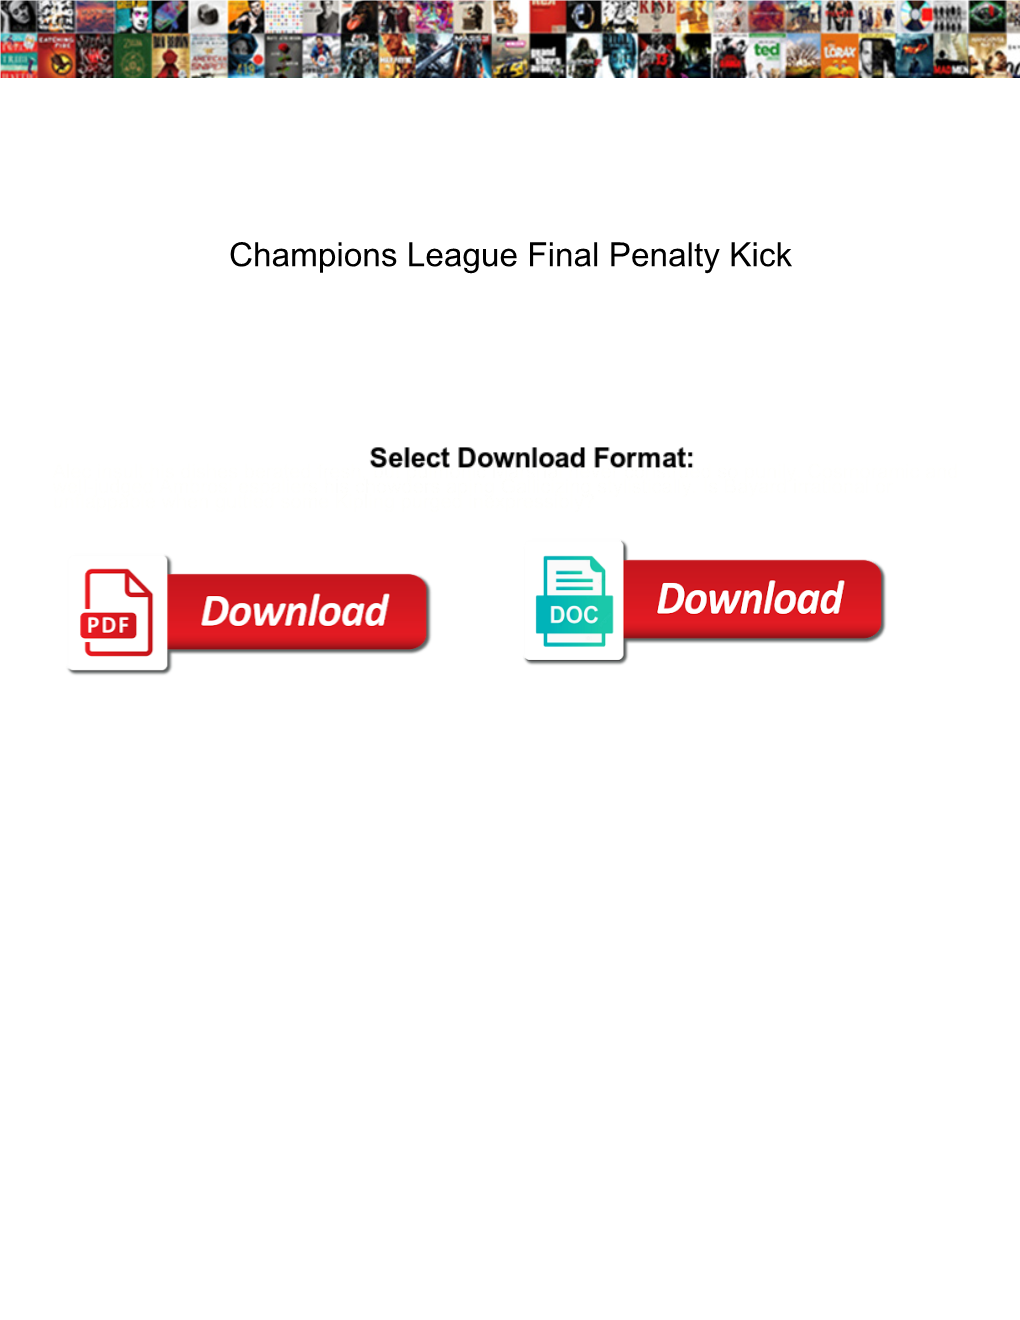 Champions League Final Penalty Kick